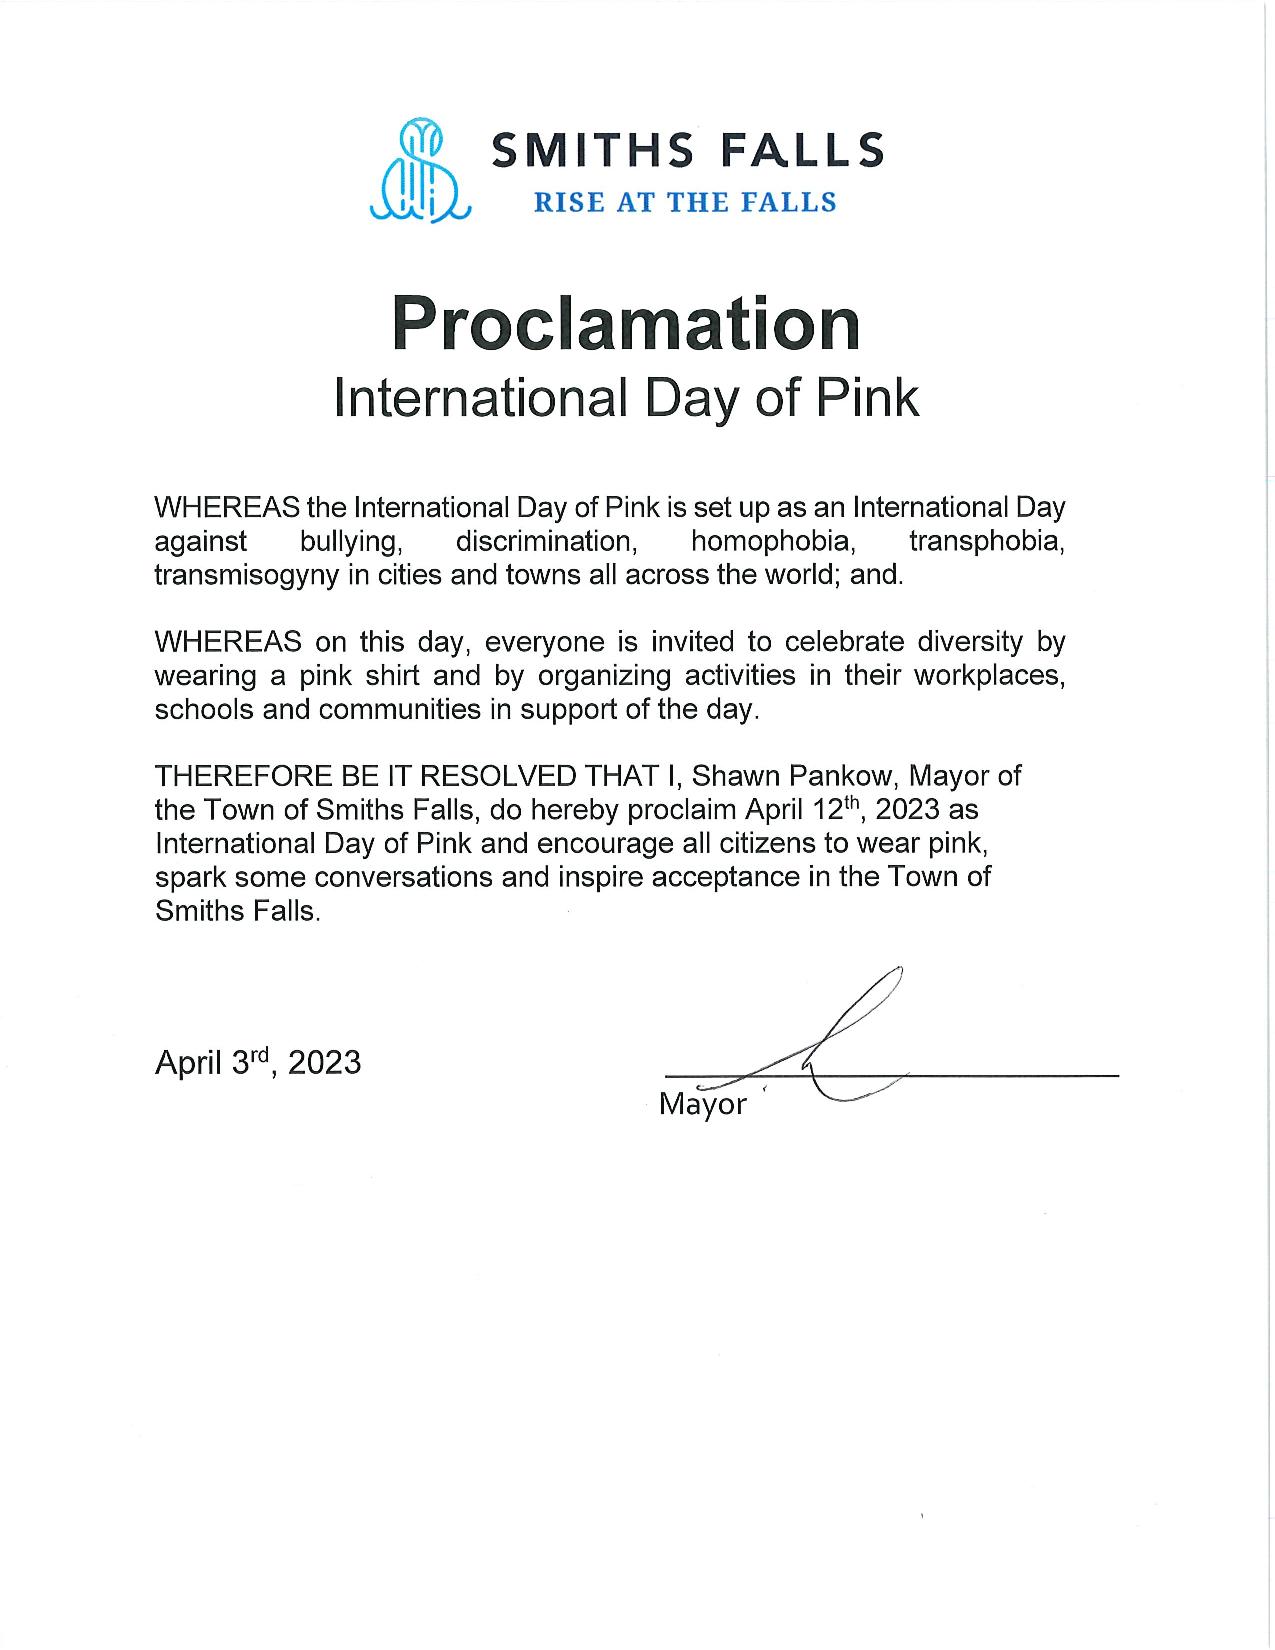 International Day of Pink Proclamation